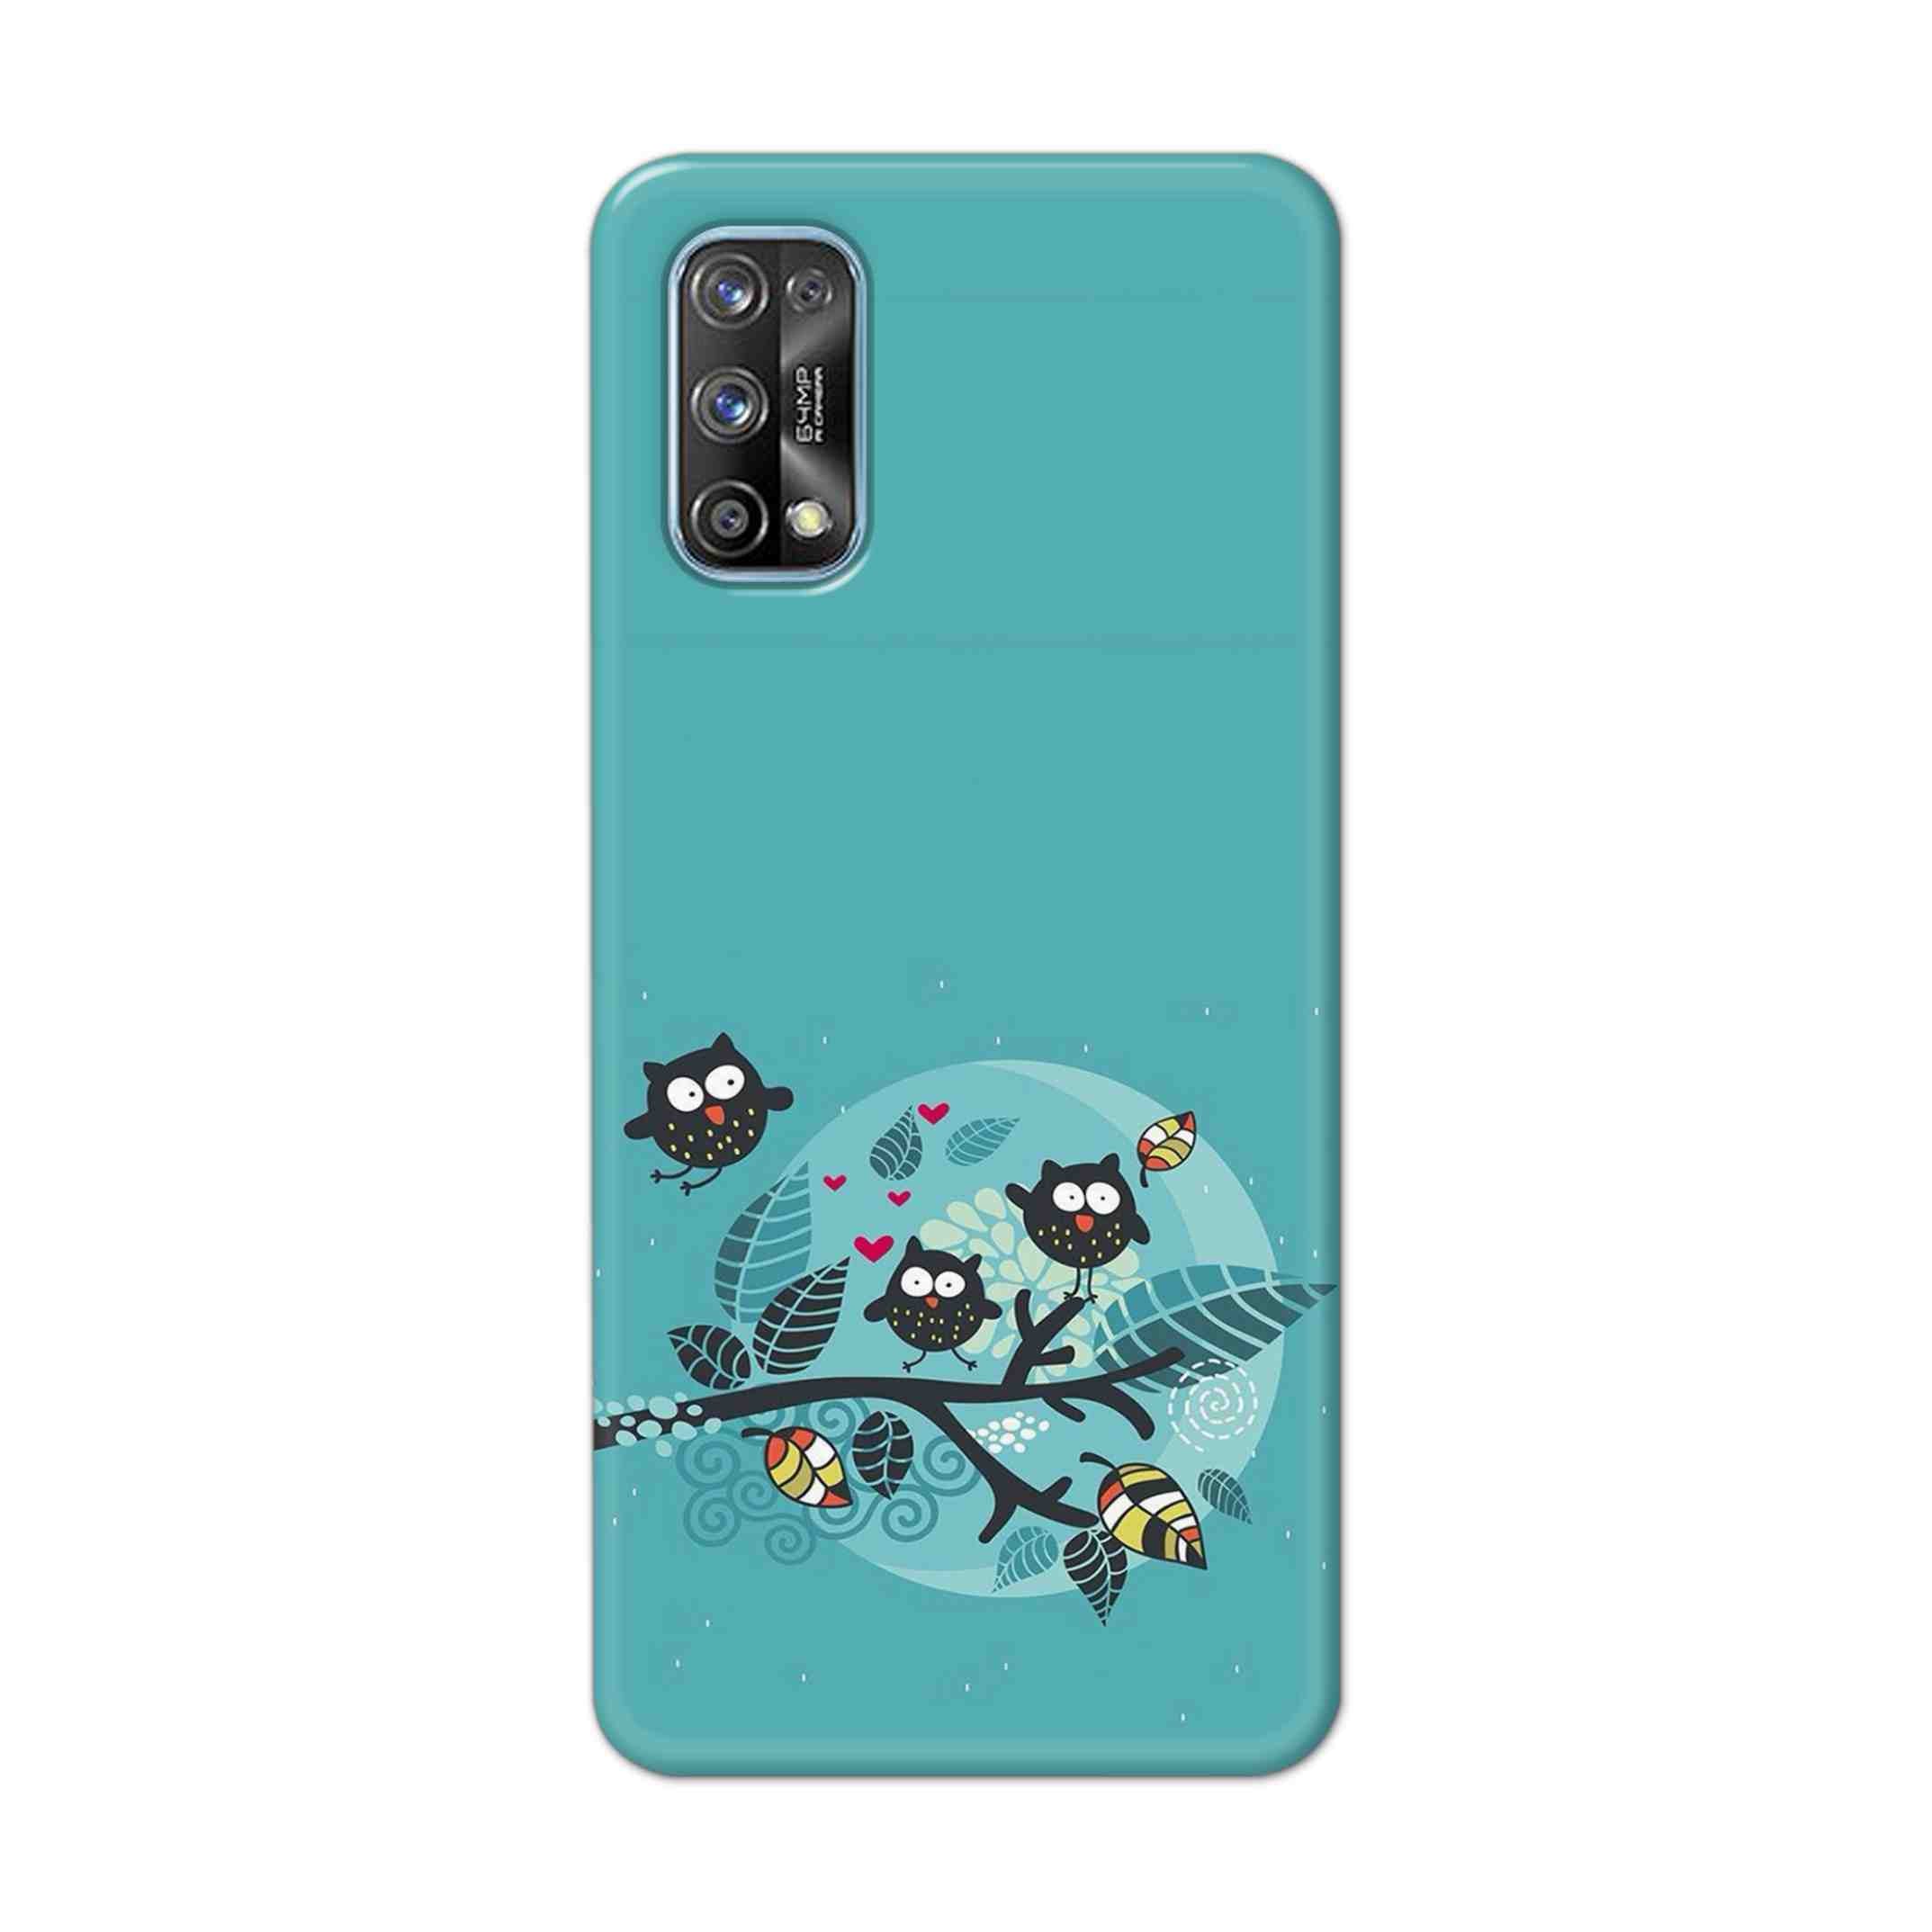 Buy Owl Hard Back Mobile Phone Case Cover For Realme 7 Pro Online